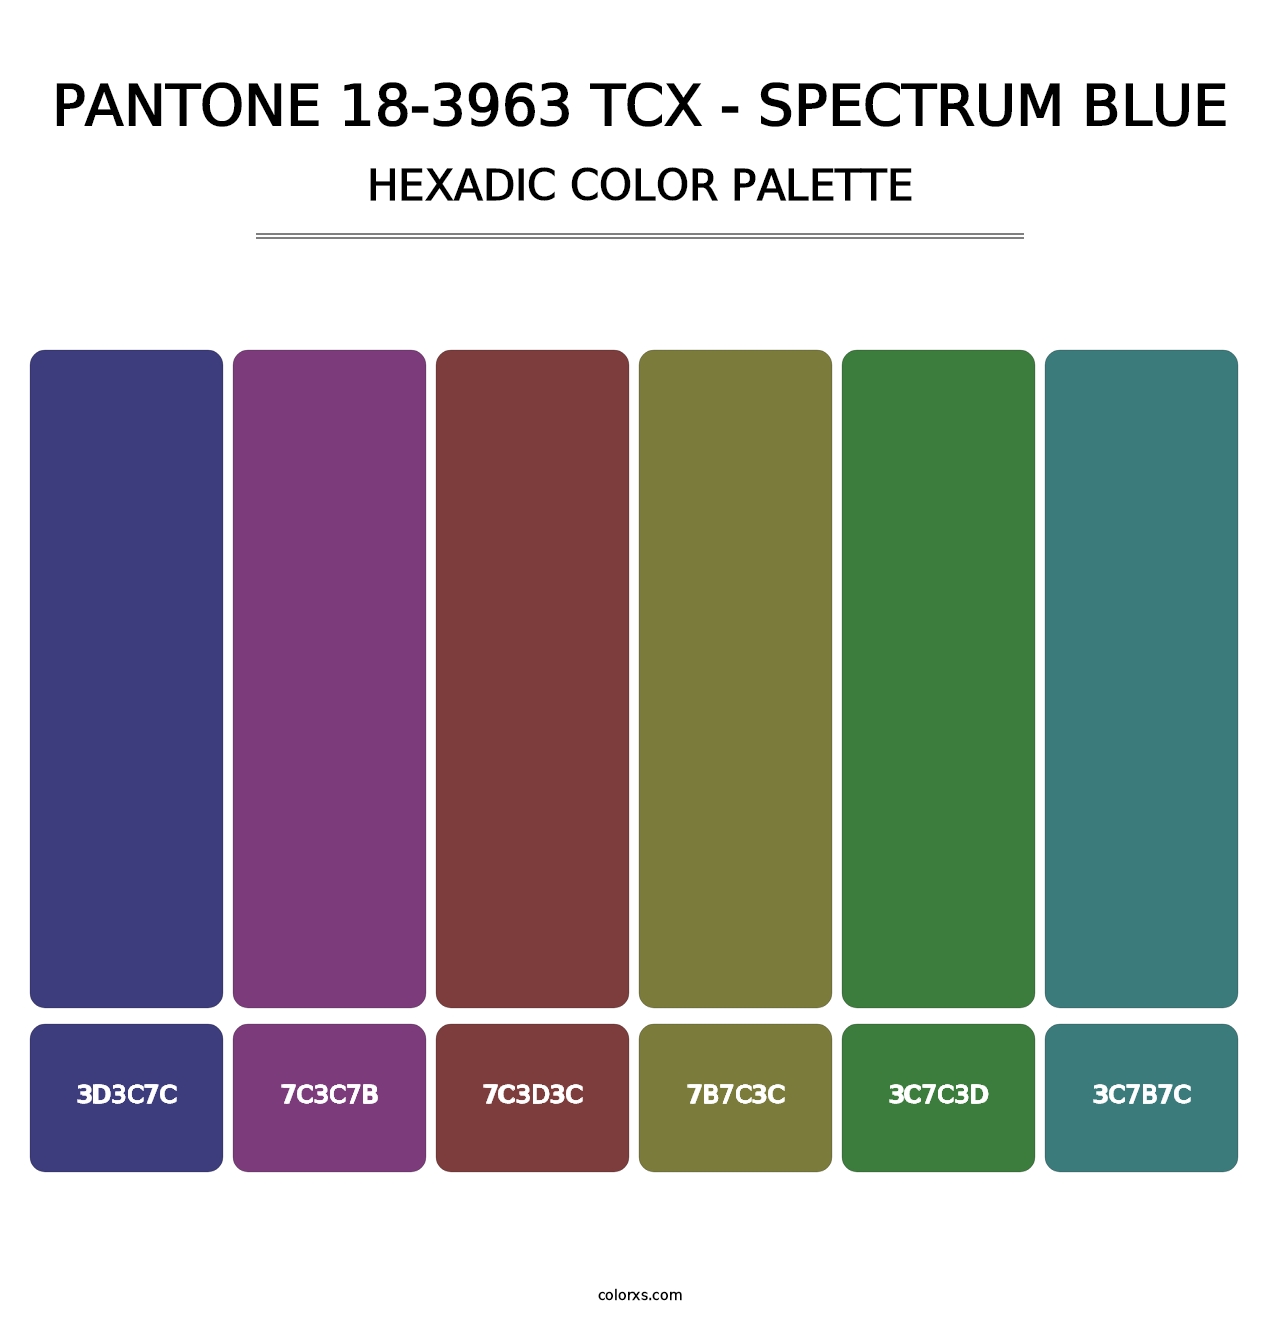 PANTONE 18-3963 TCX - Spectrum Blue - Hexadic Color Palette